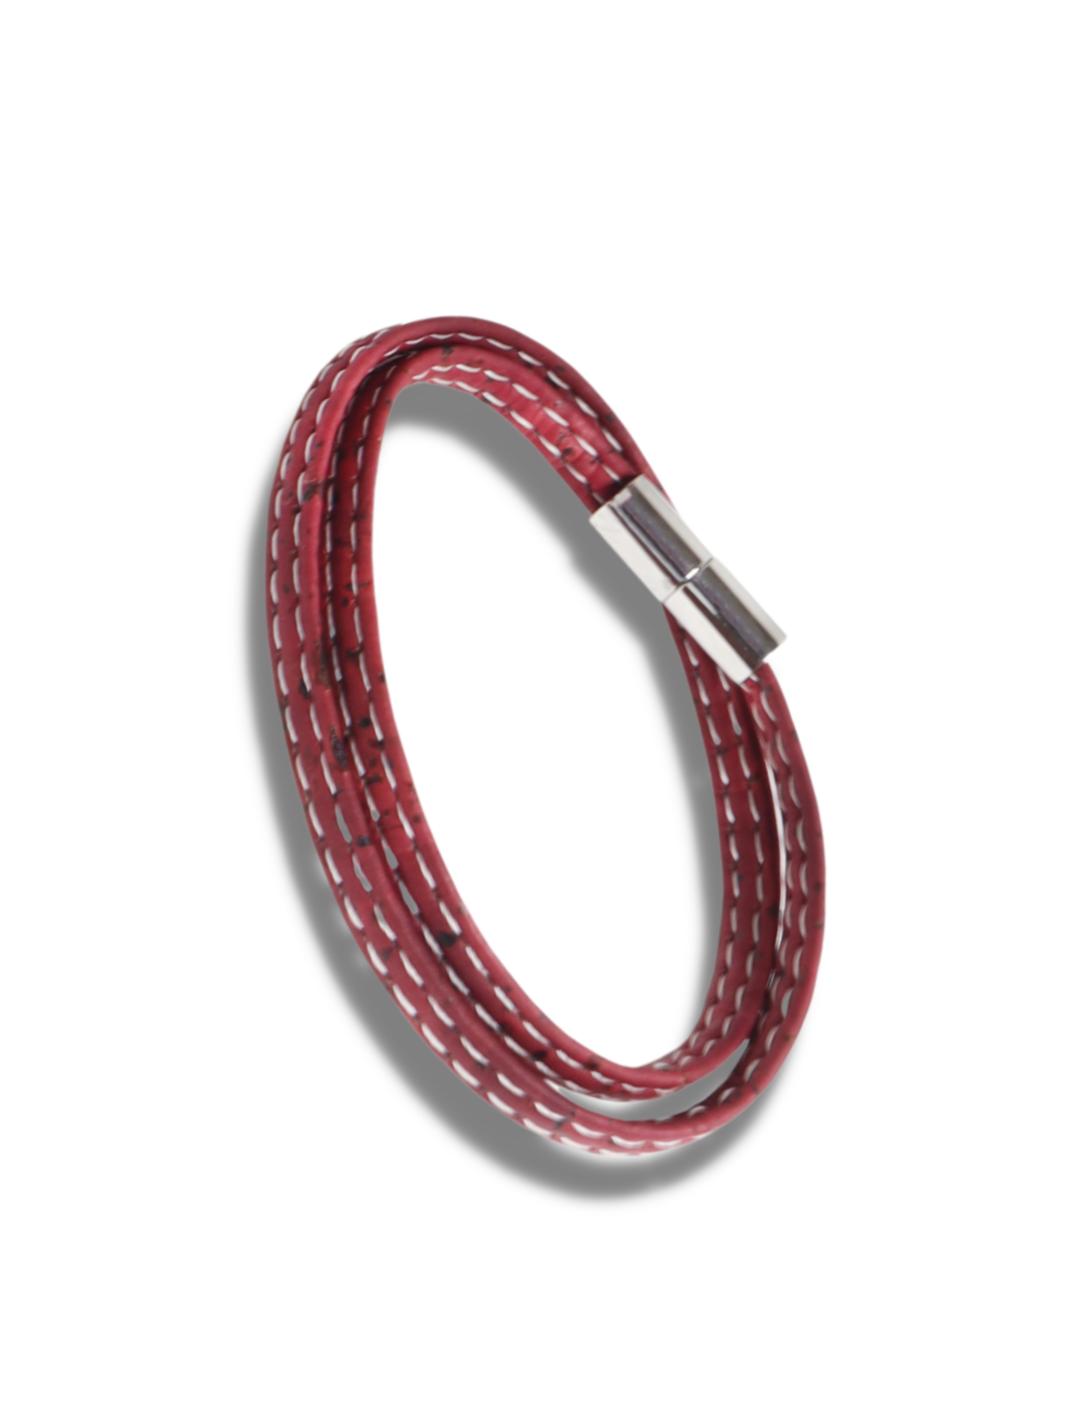 Men’s Wrap Bracelet in Cork for Men with magnetic clasp